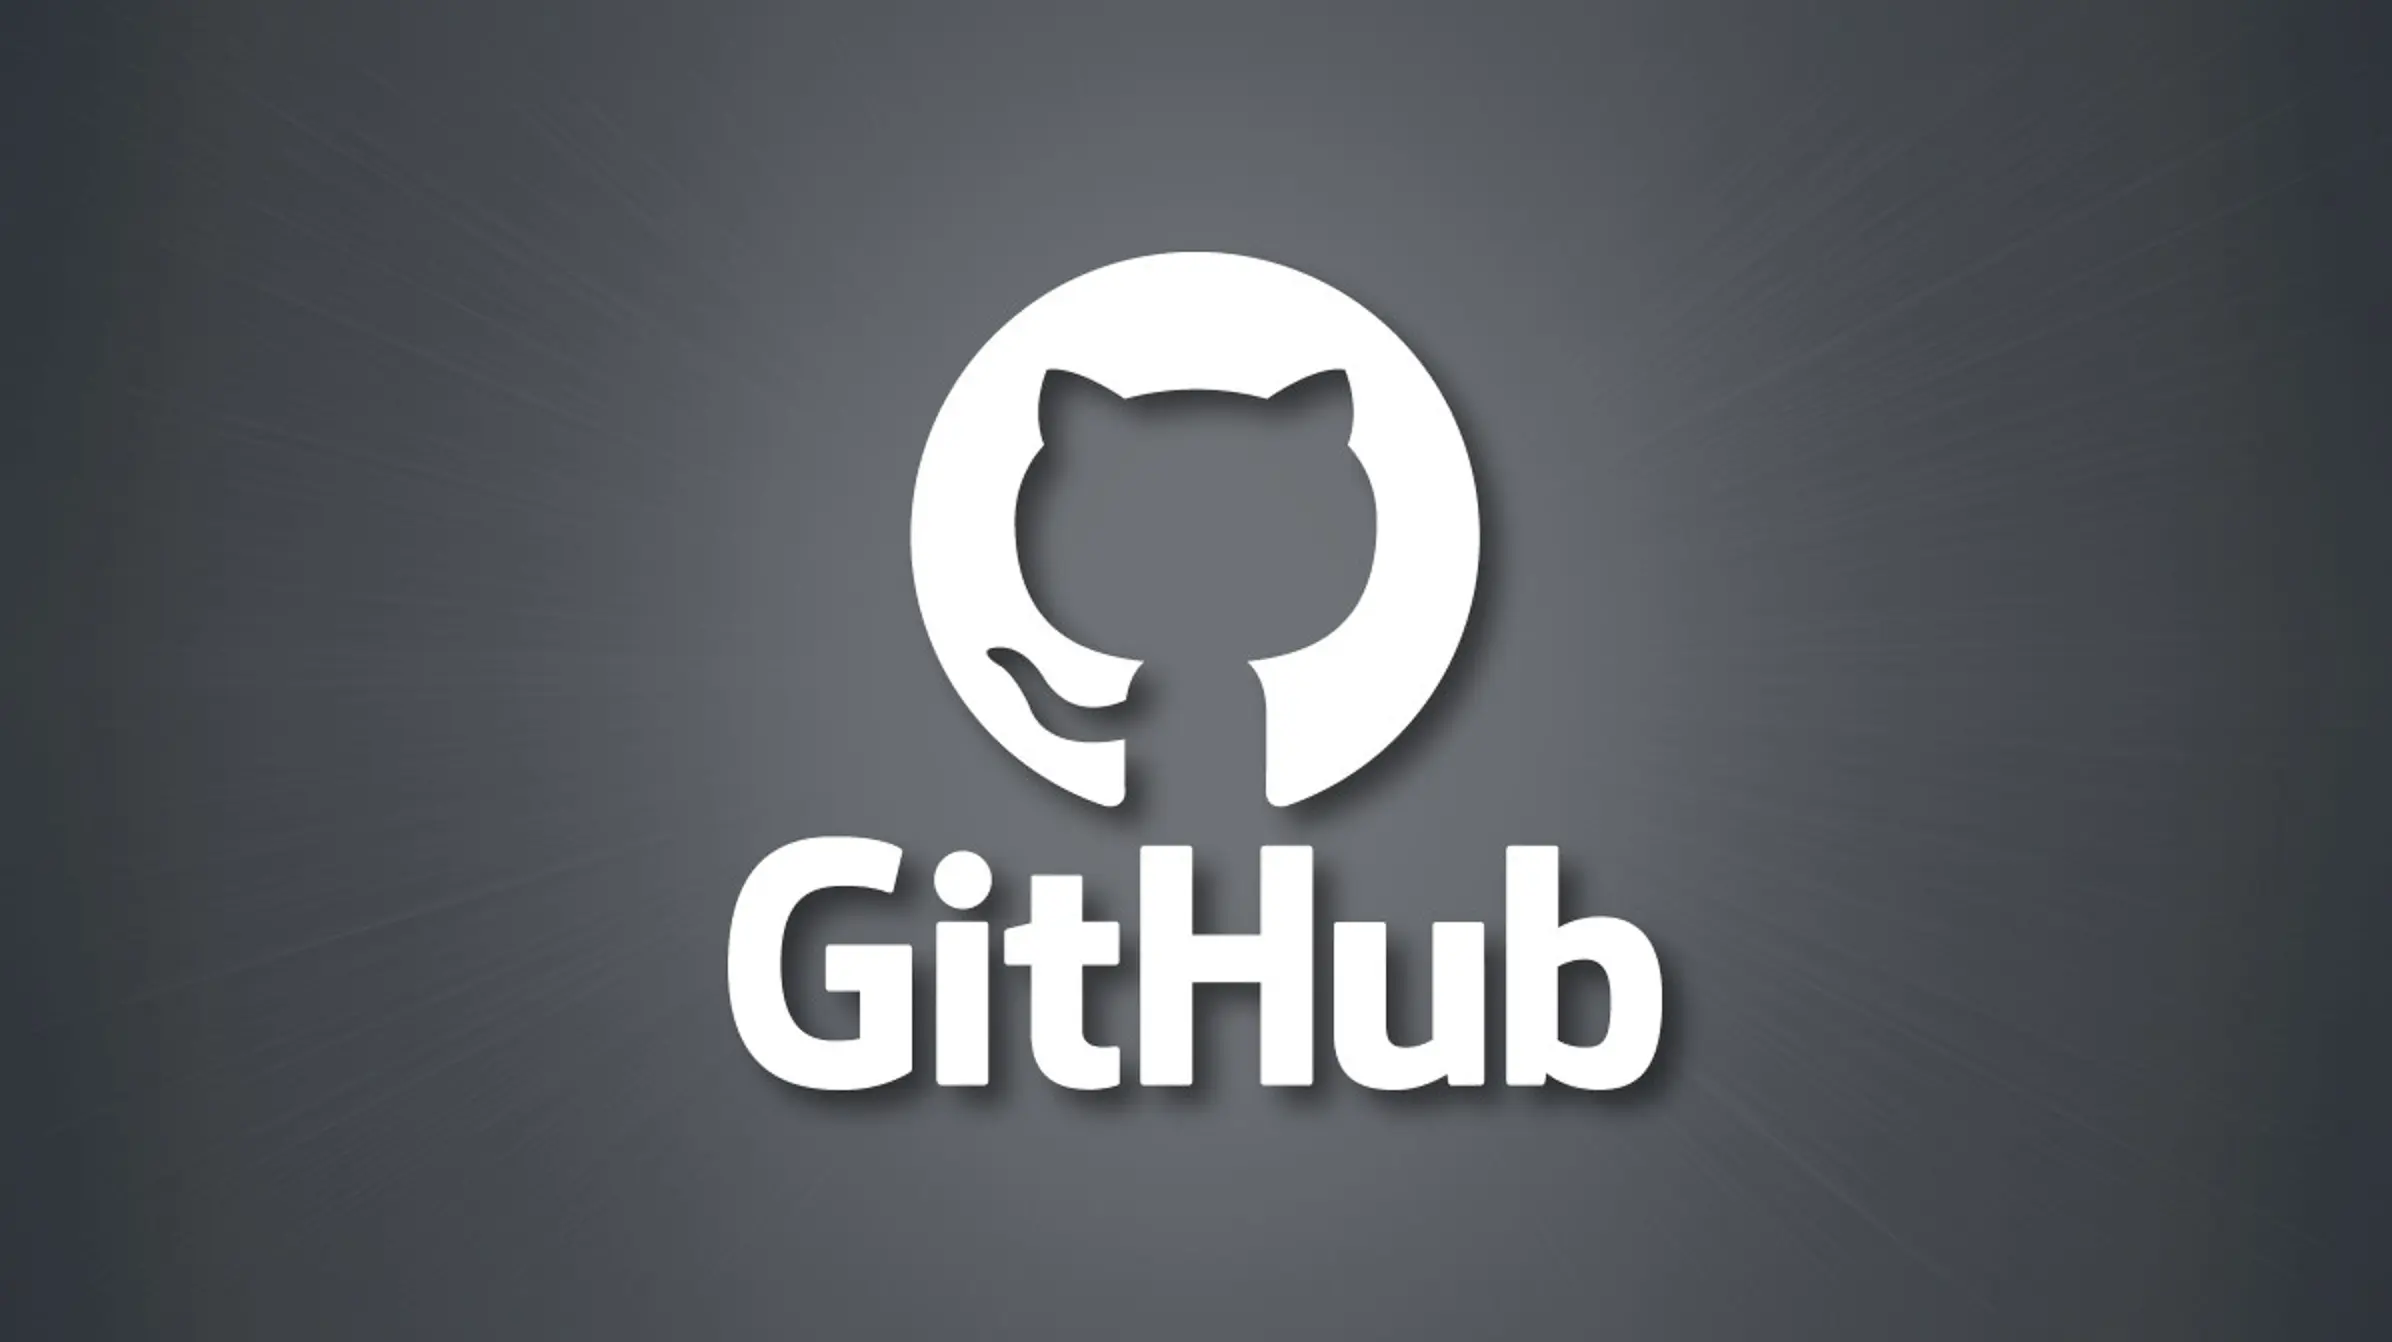 logica-de-programacao · GitHub Topics · GitHub